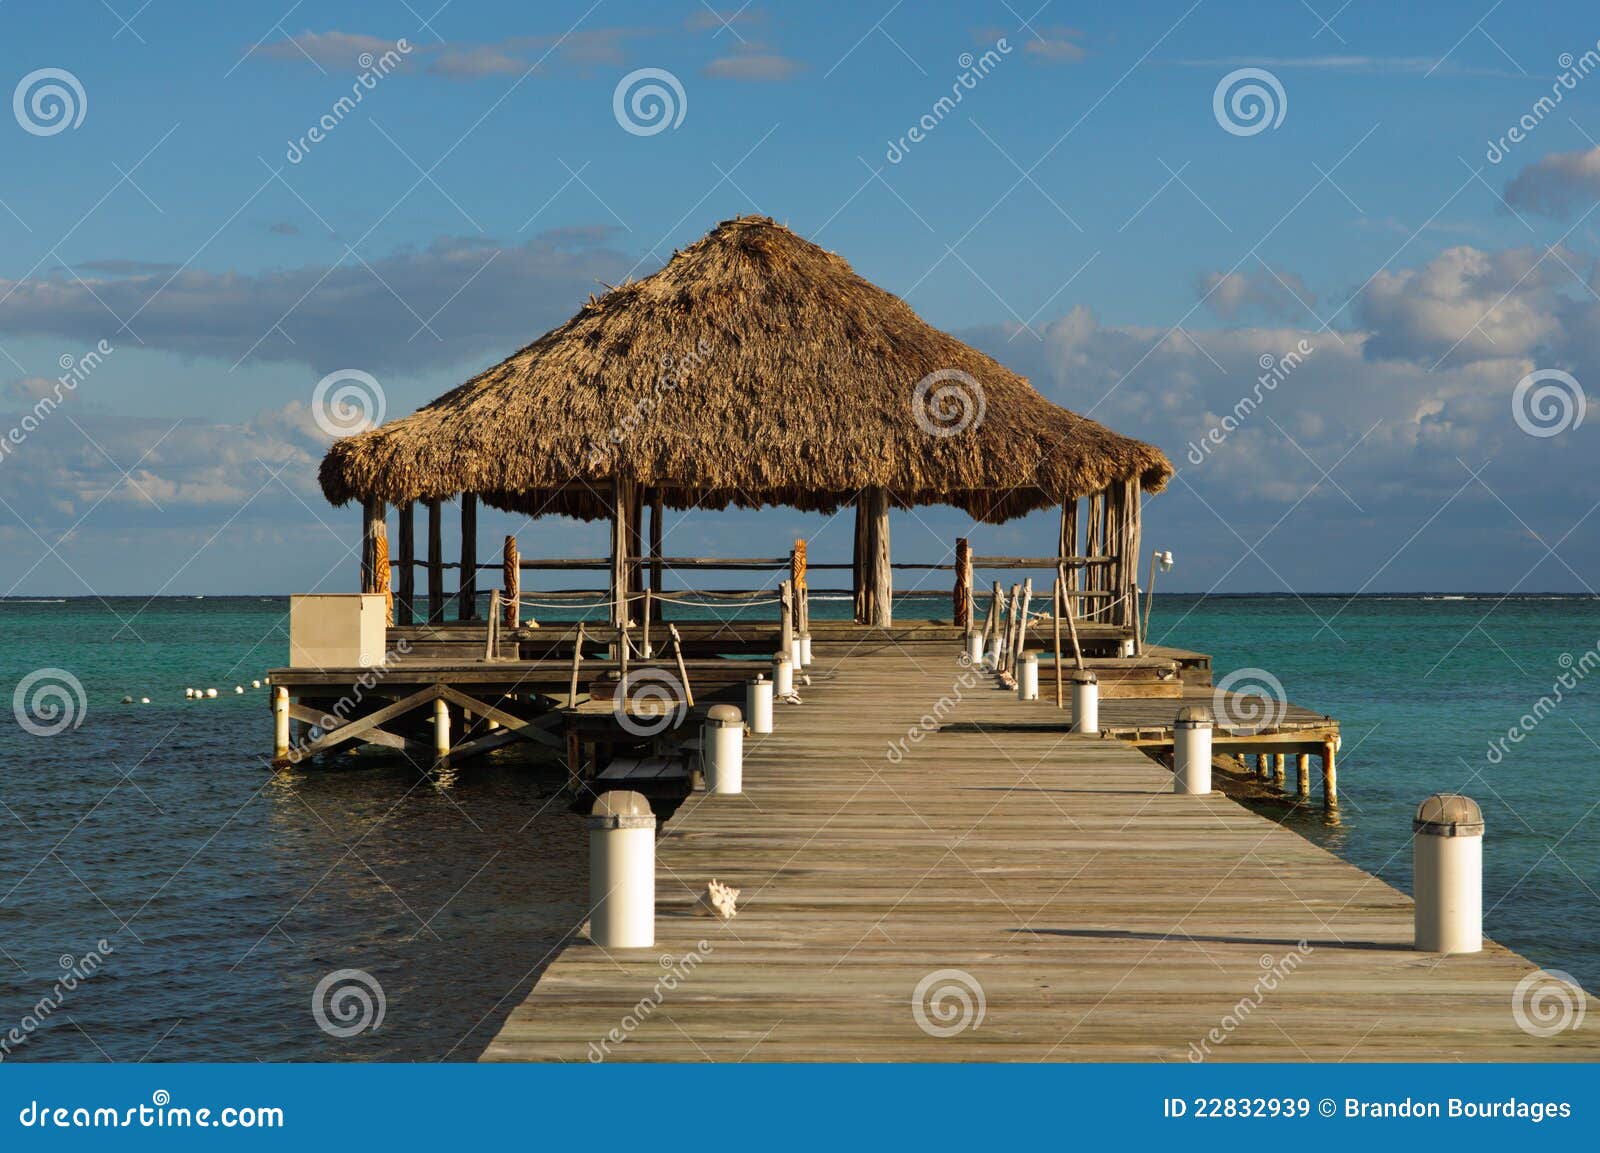 beach deck with palapa